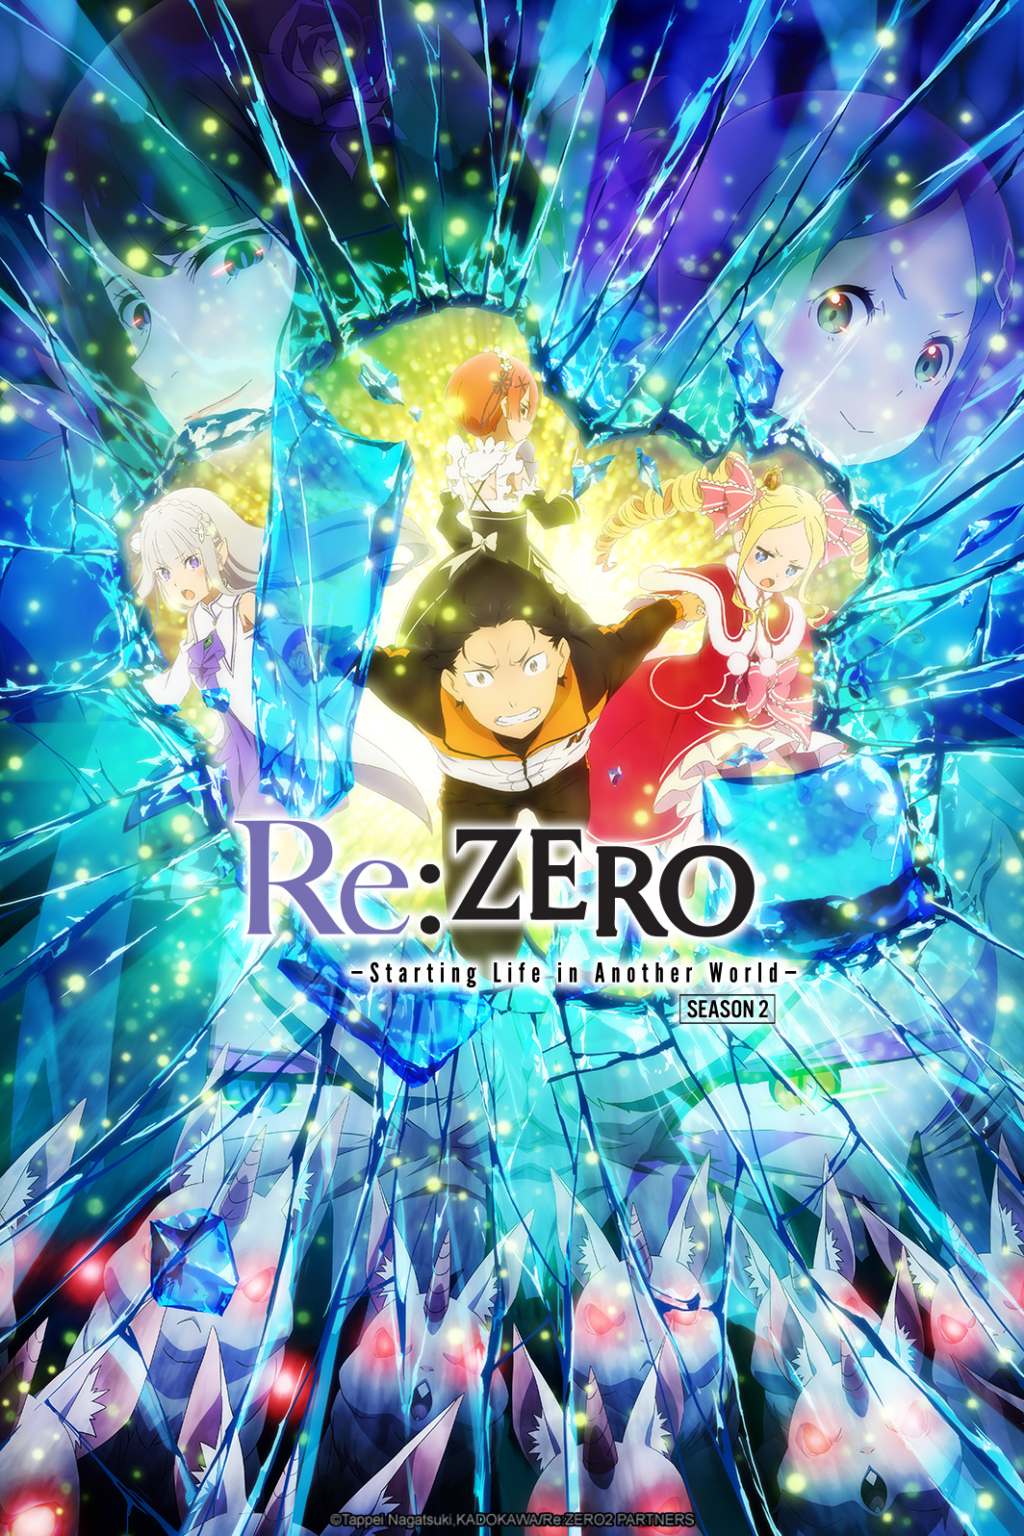 Re:ZERO Season 2 Tops Japan's Summer 2020 Rankings